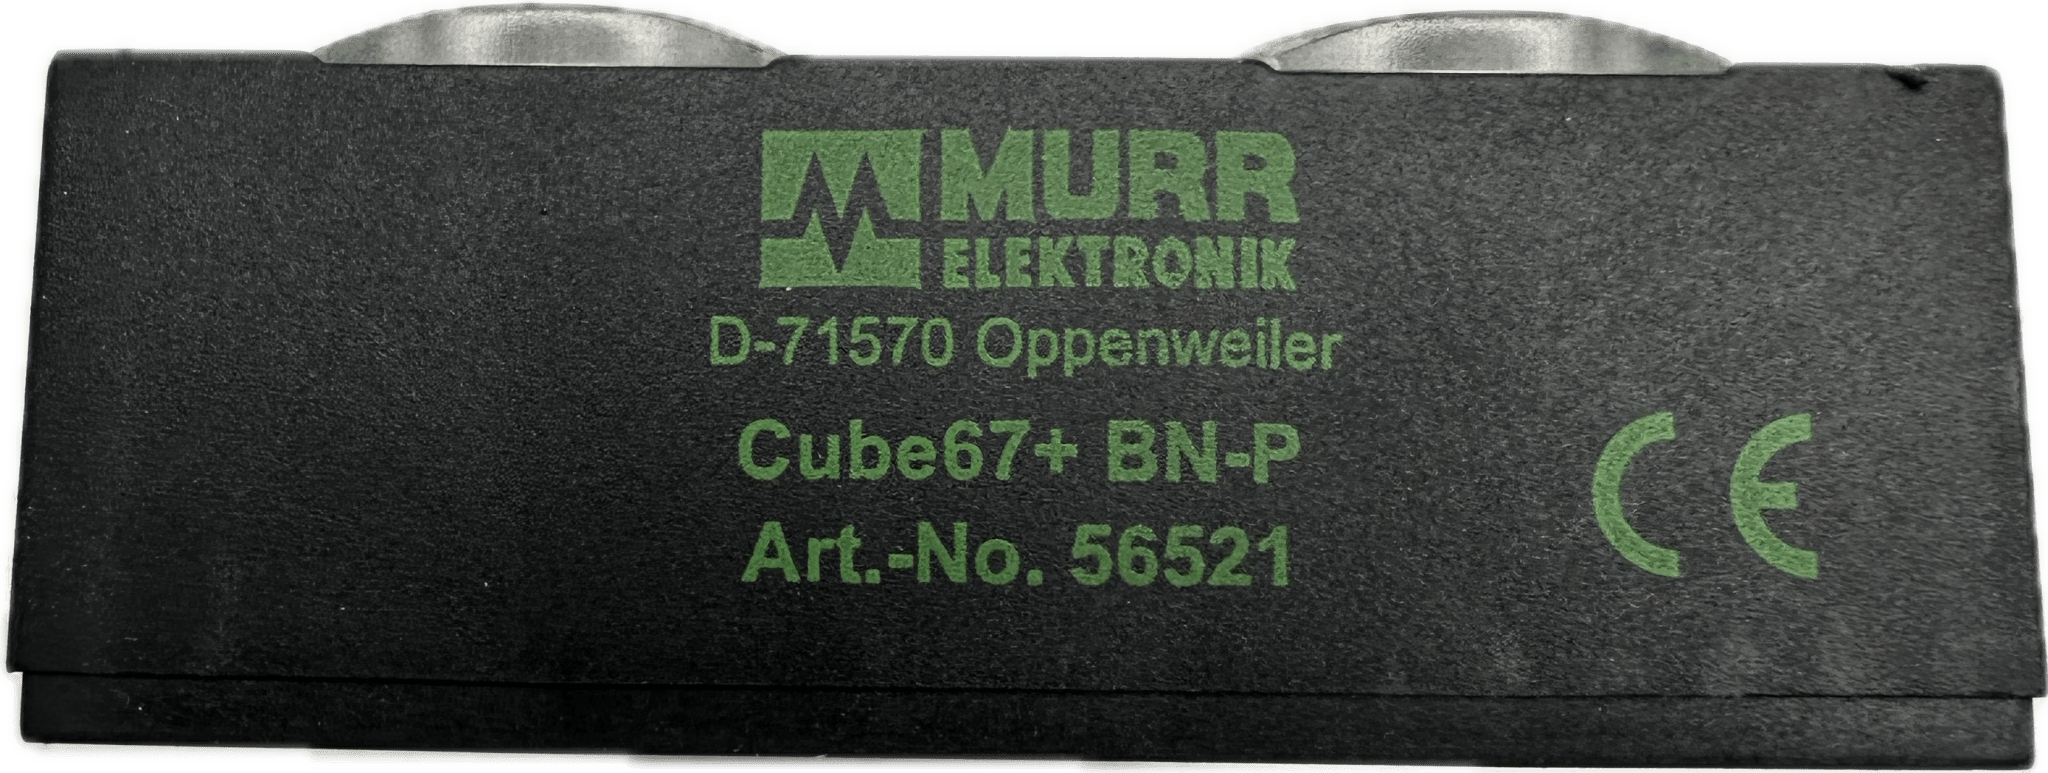 Murr-Elektronik Cube67+ Busknoten 56521 - #product_category# | Klenk Maschinenhandel